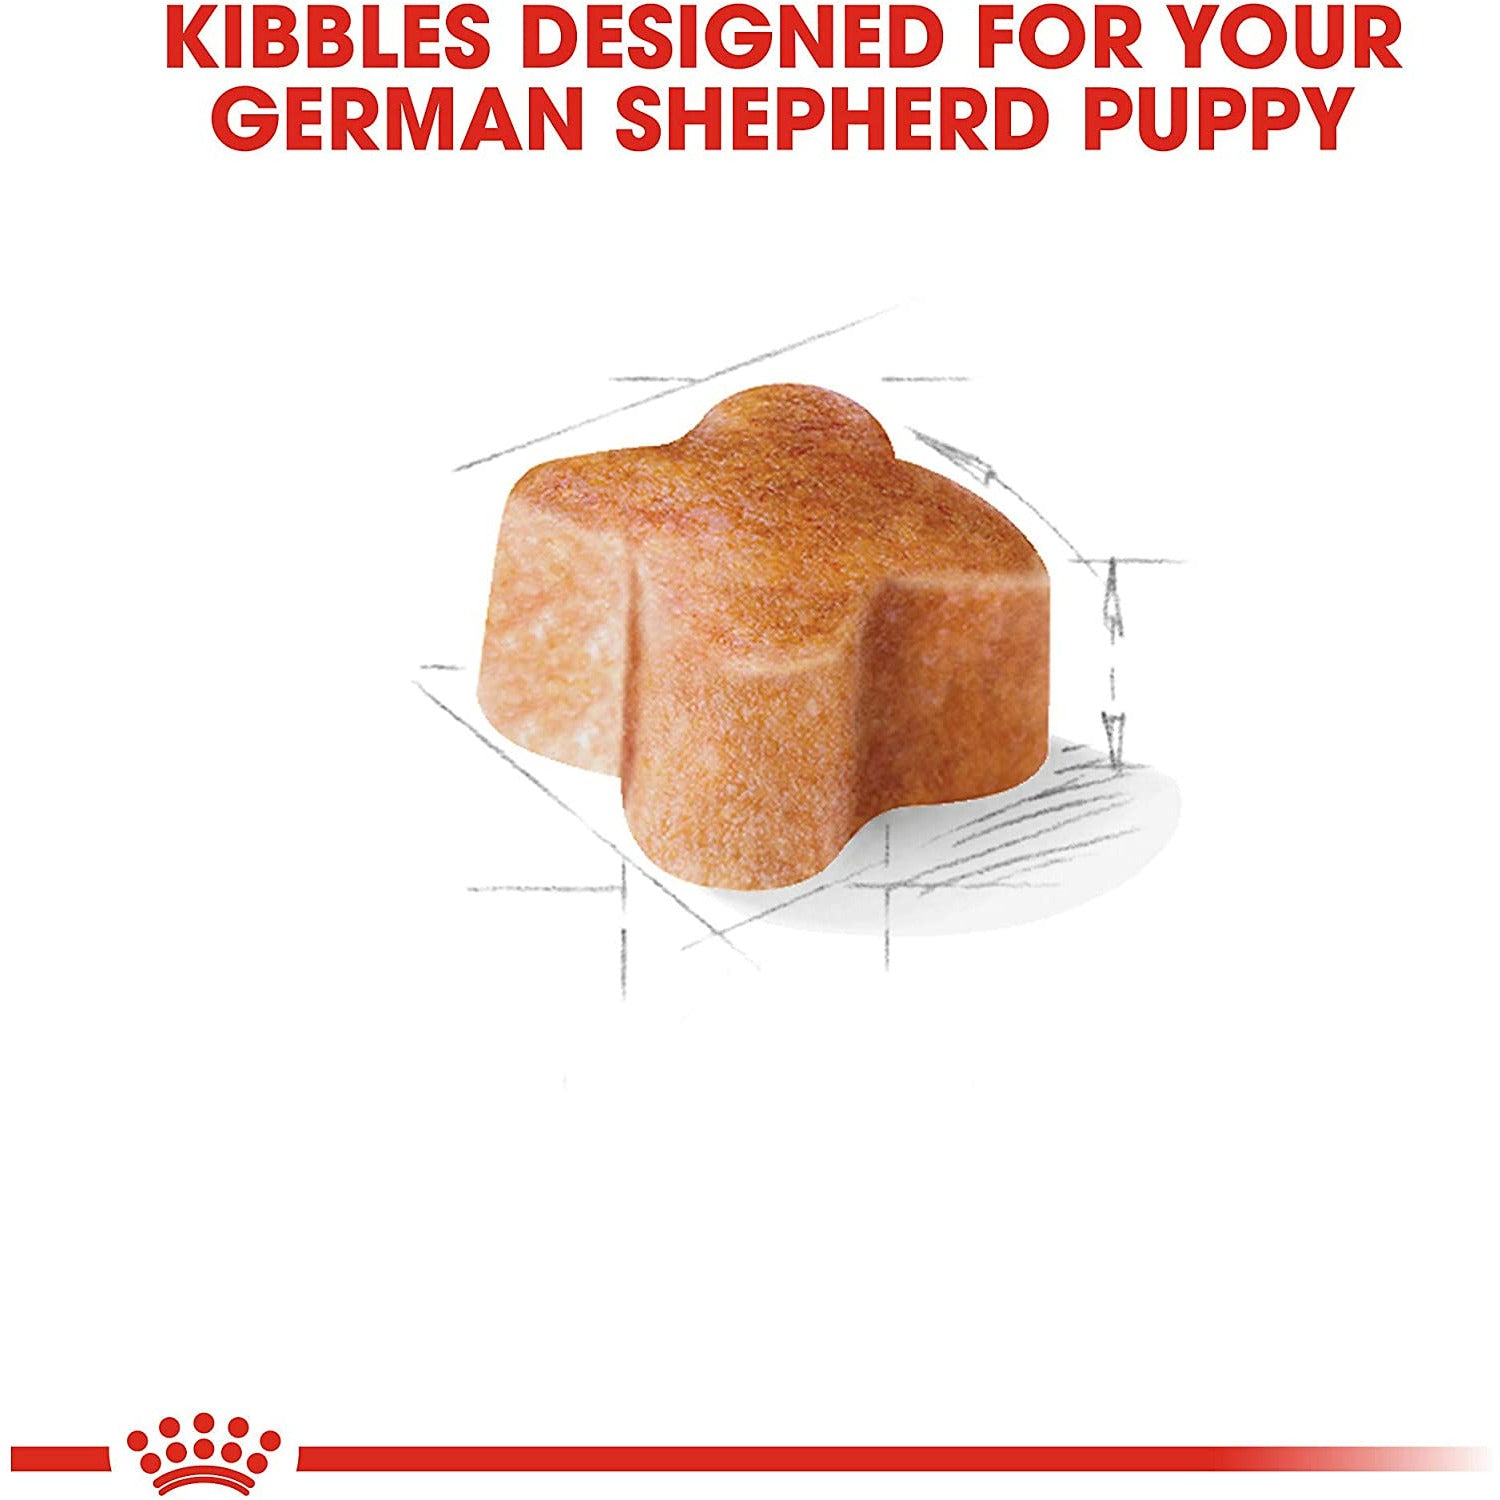 Royal Canin German Shepherd Puppy Food  Dog Food  | PetMax Canada